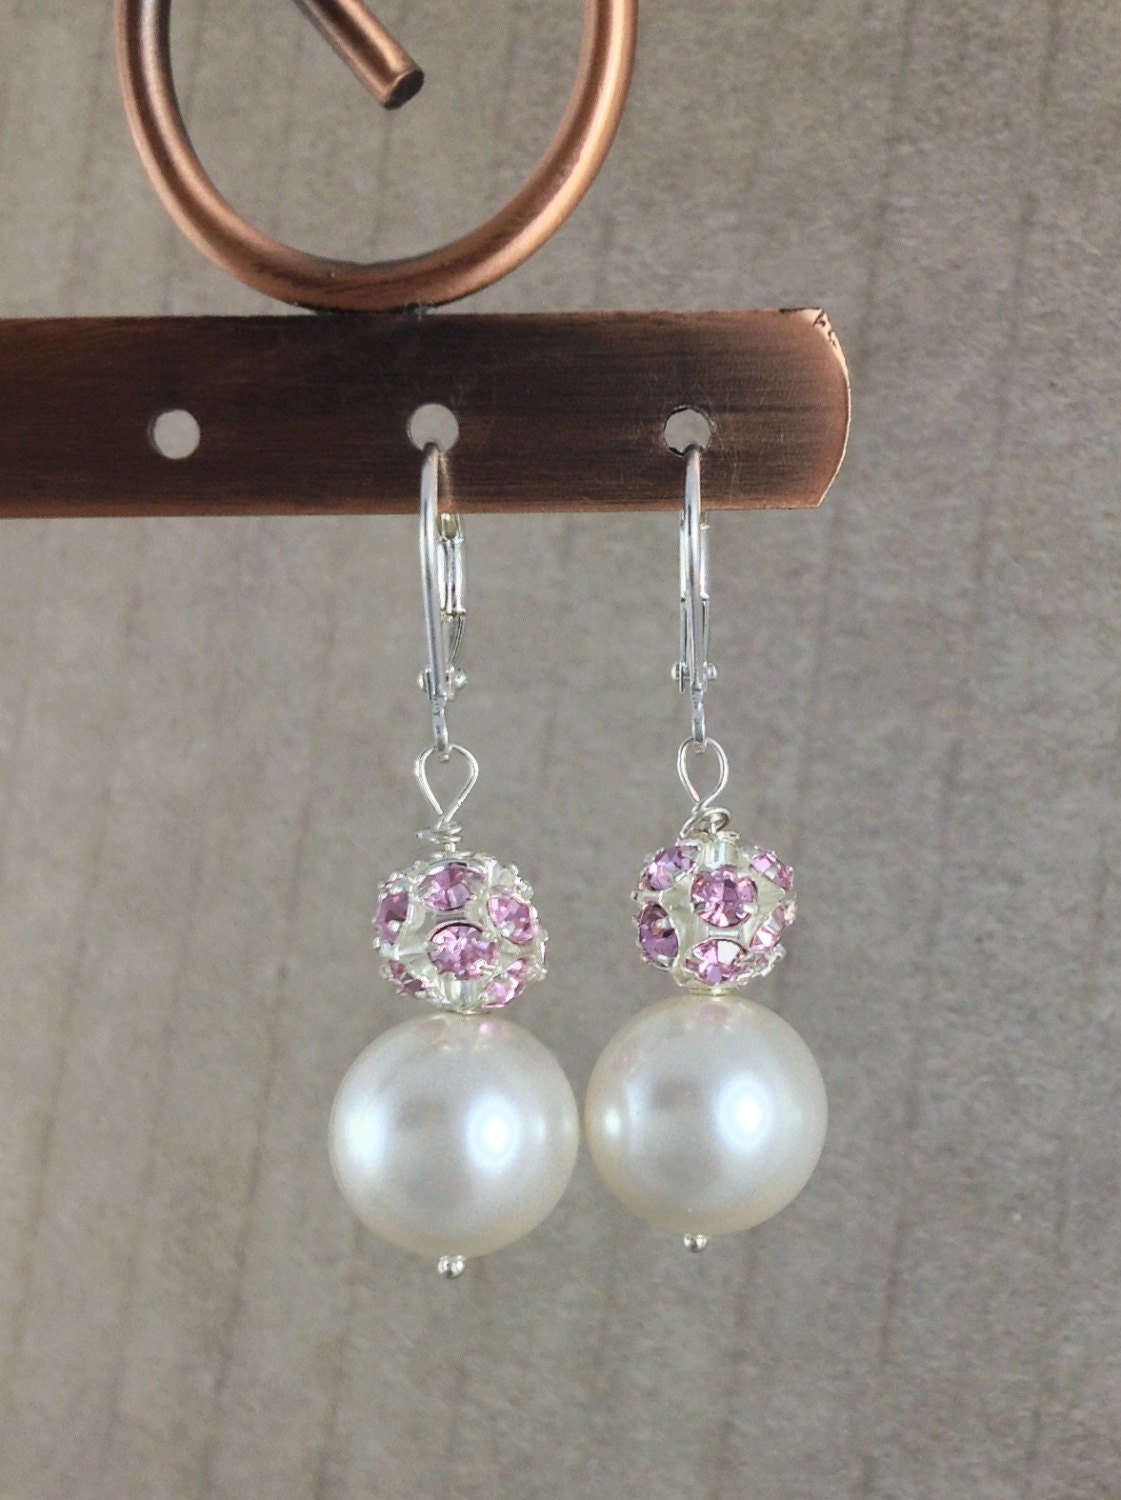 White pearl and pink rhinestone earrings on silver leverback. Handmade white Swarovski pearl earrings with pink Egyptian crystal rhinestones - GemsByKelley